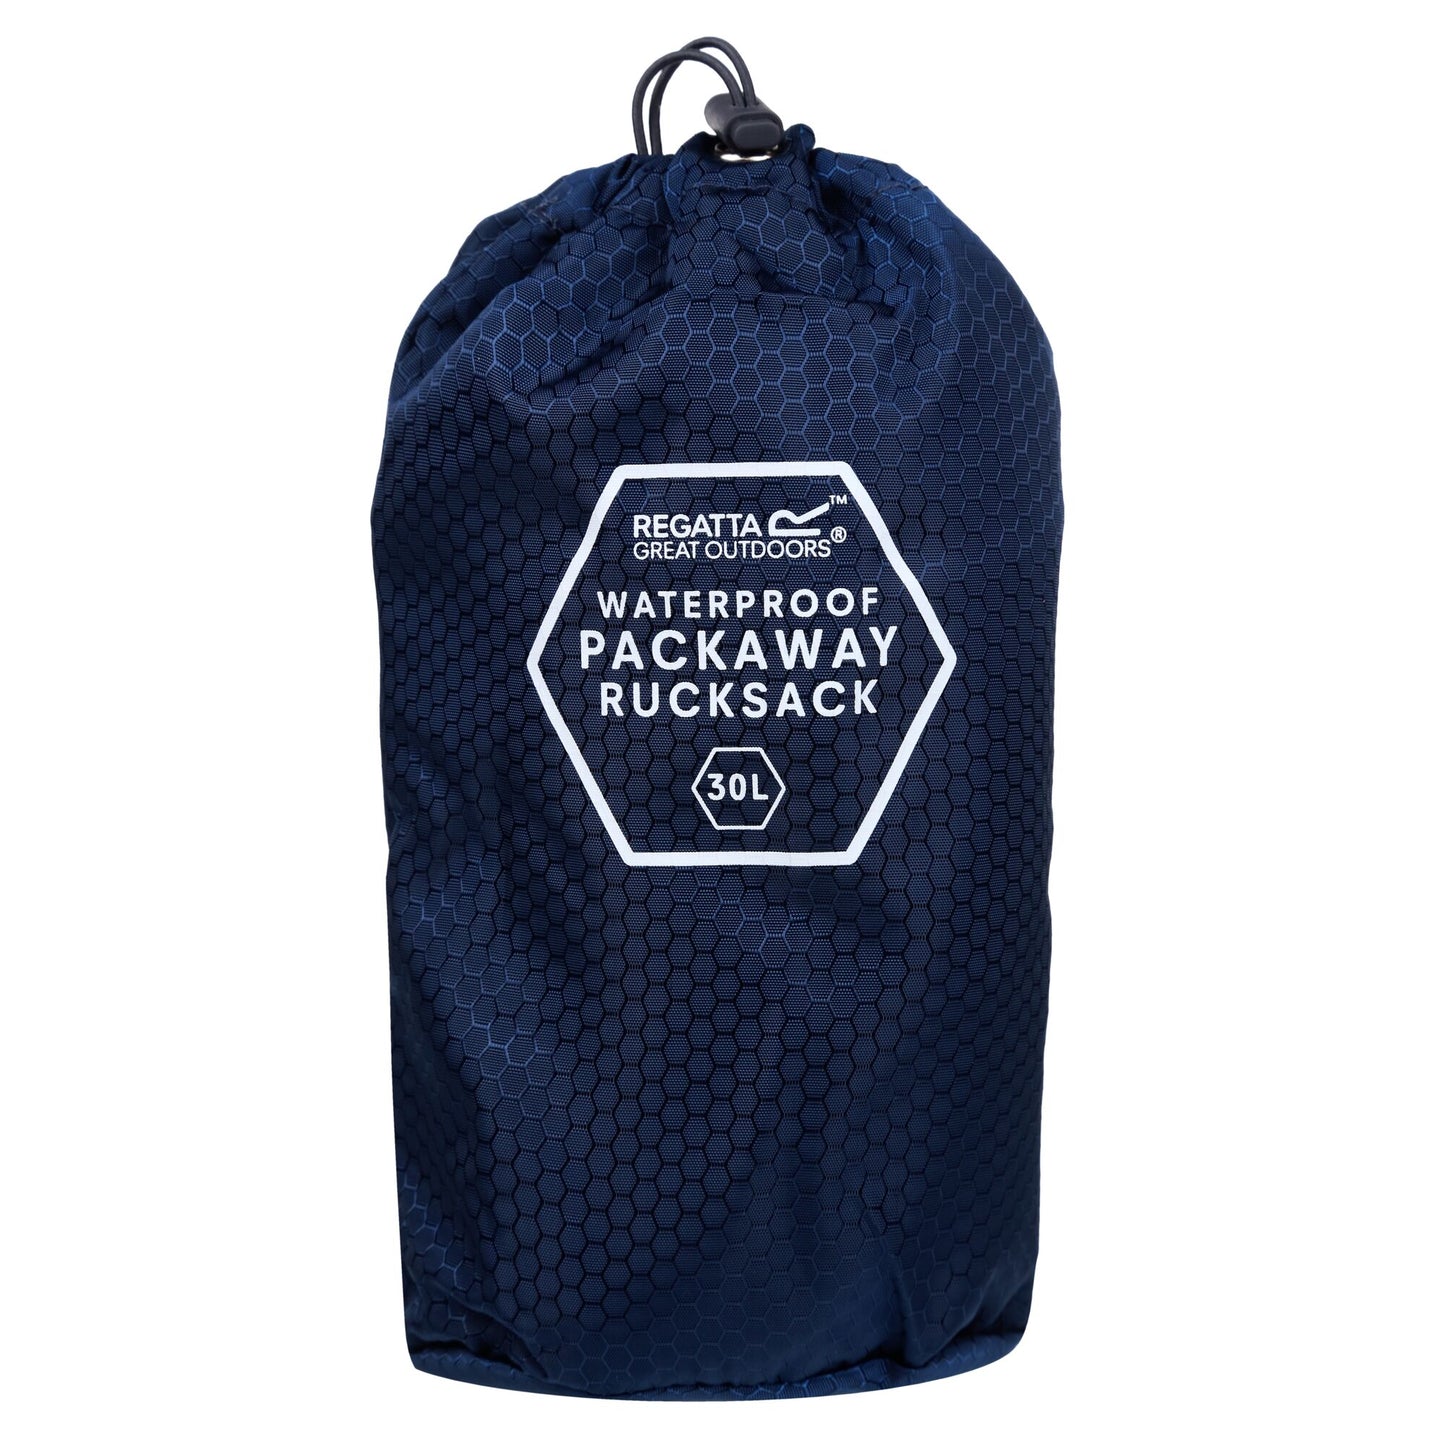 Regatta Easypack 30L Waterproof Packaway Rucksack - Dark Denim